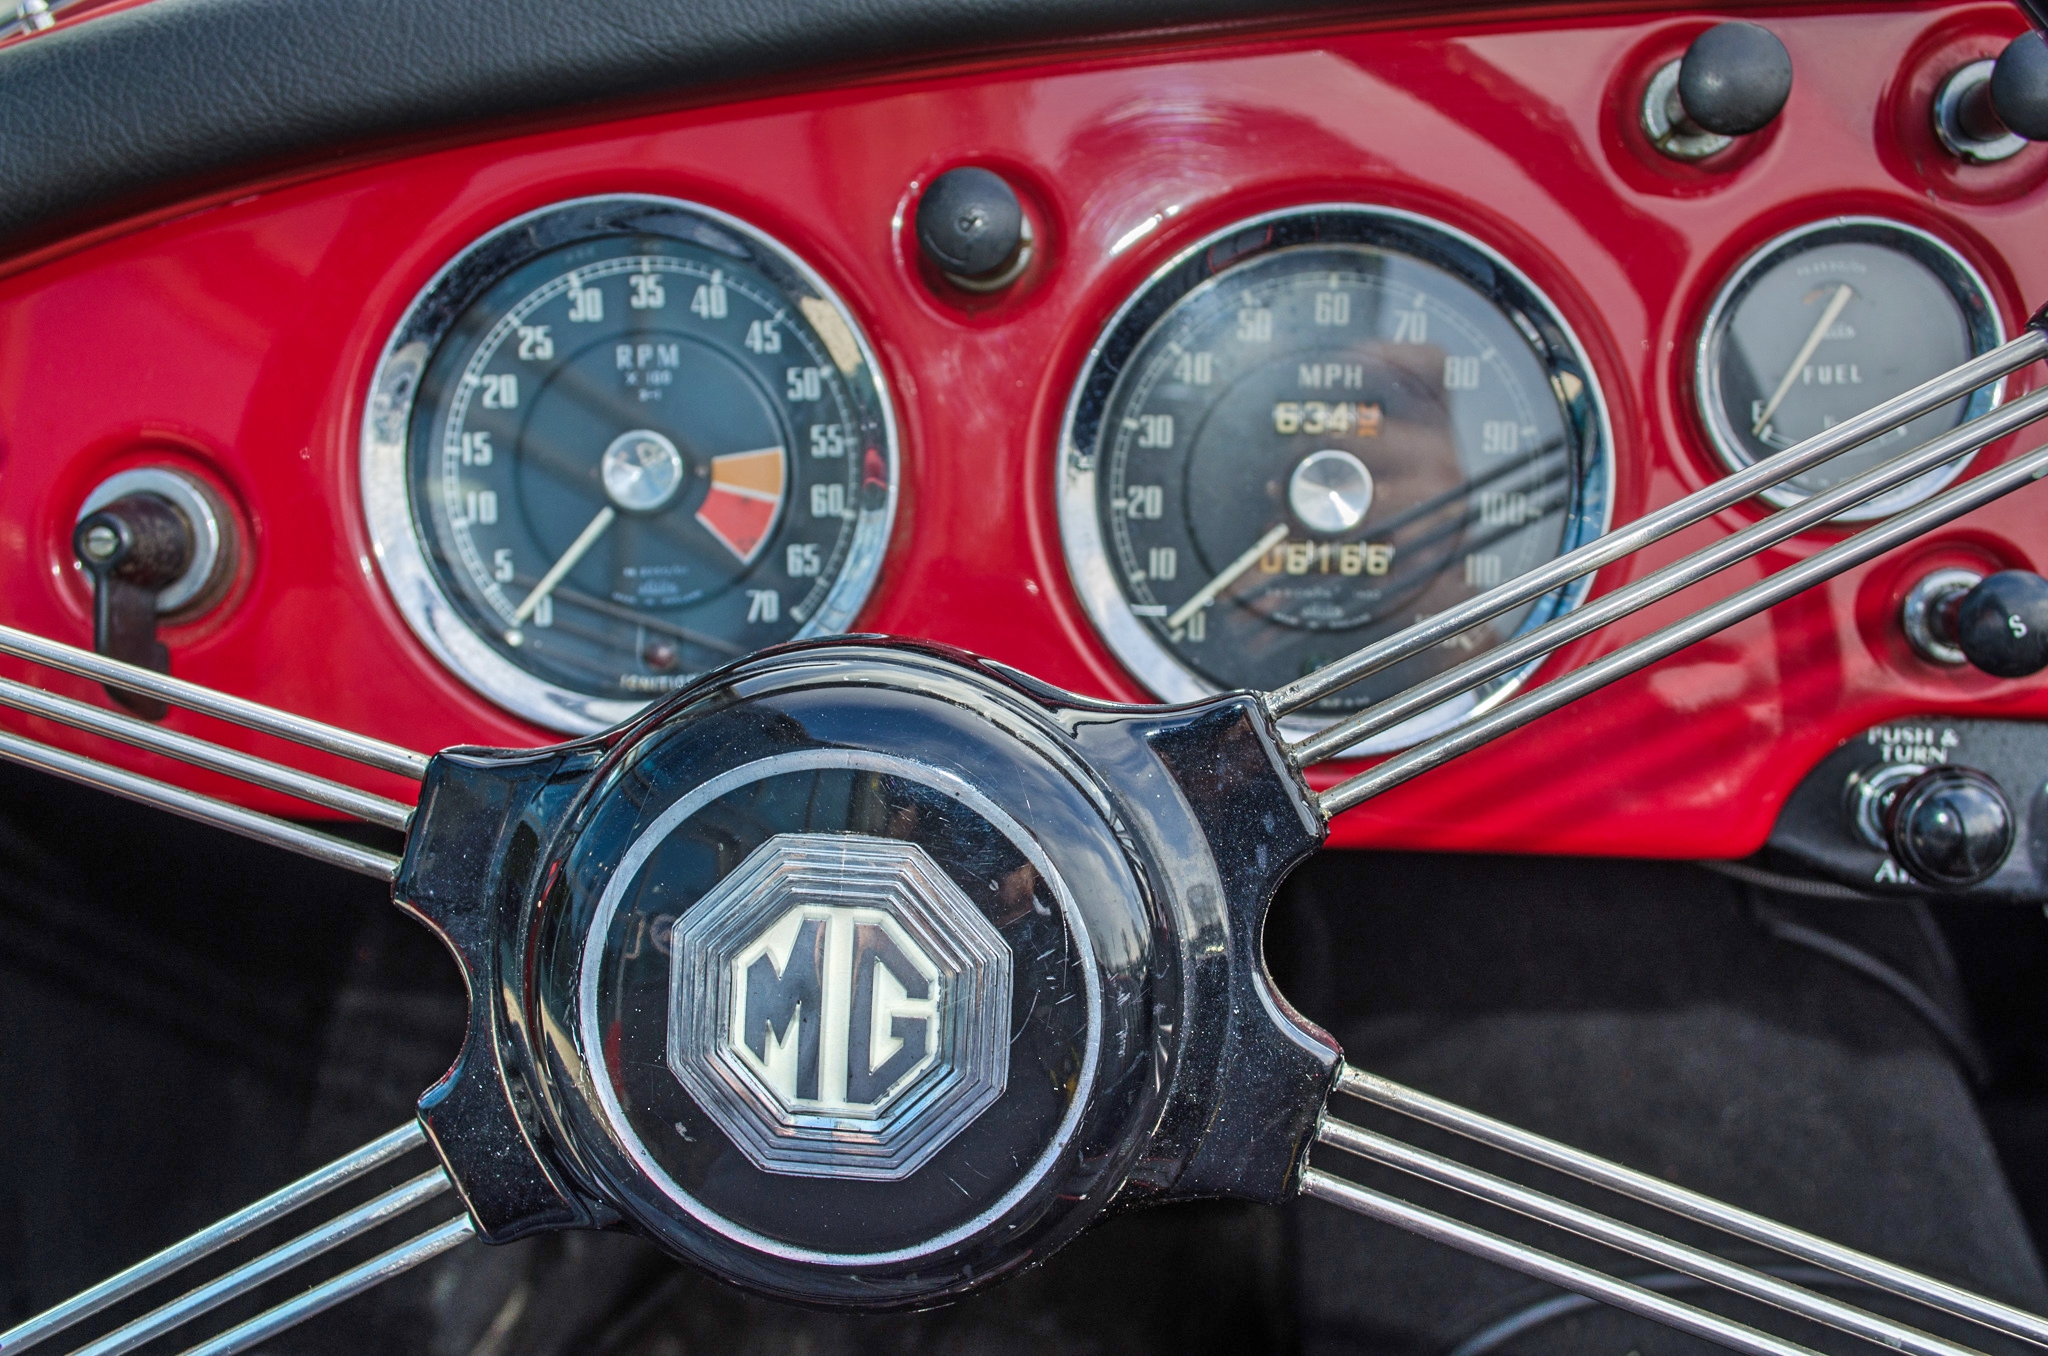 1957 MG A 1500cc 2 door convertible - Image 52 of 63